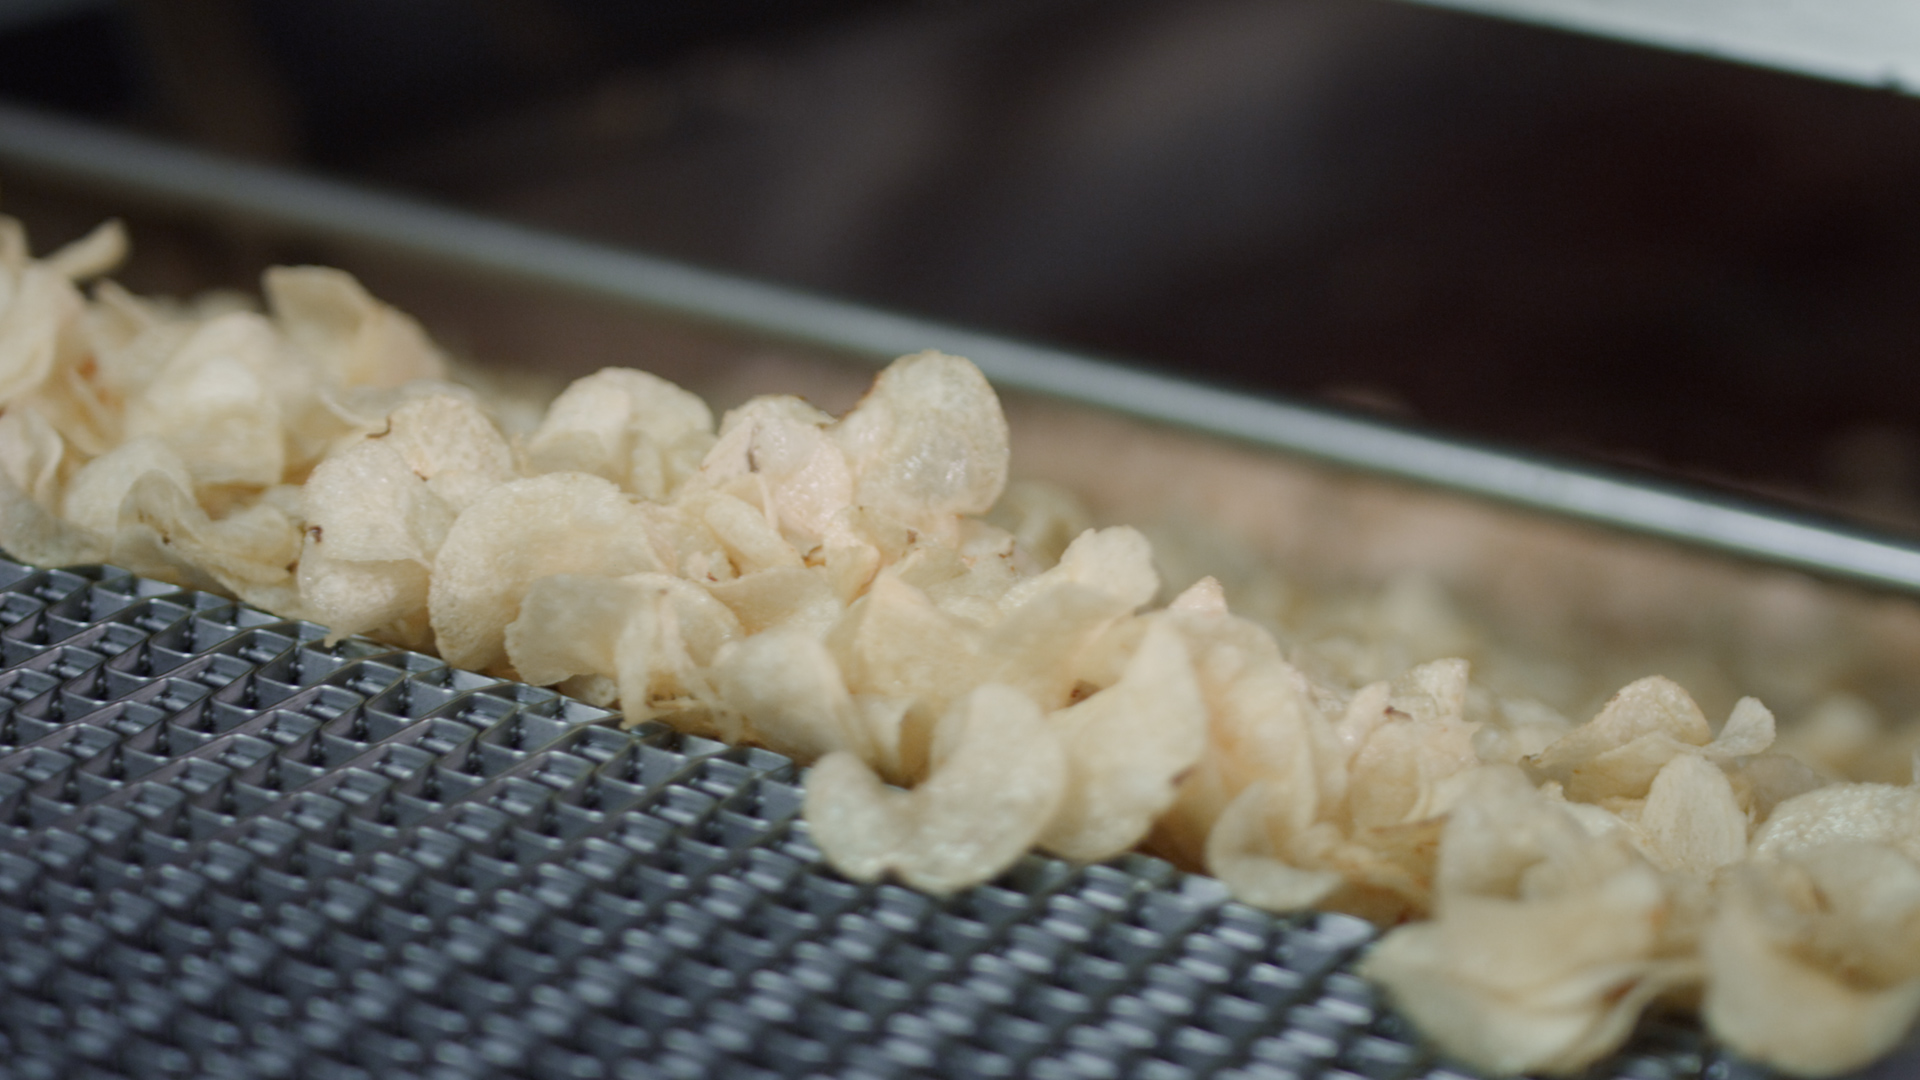 Potato chips made on Vanmark processing equipment.